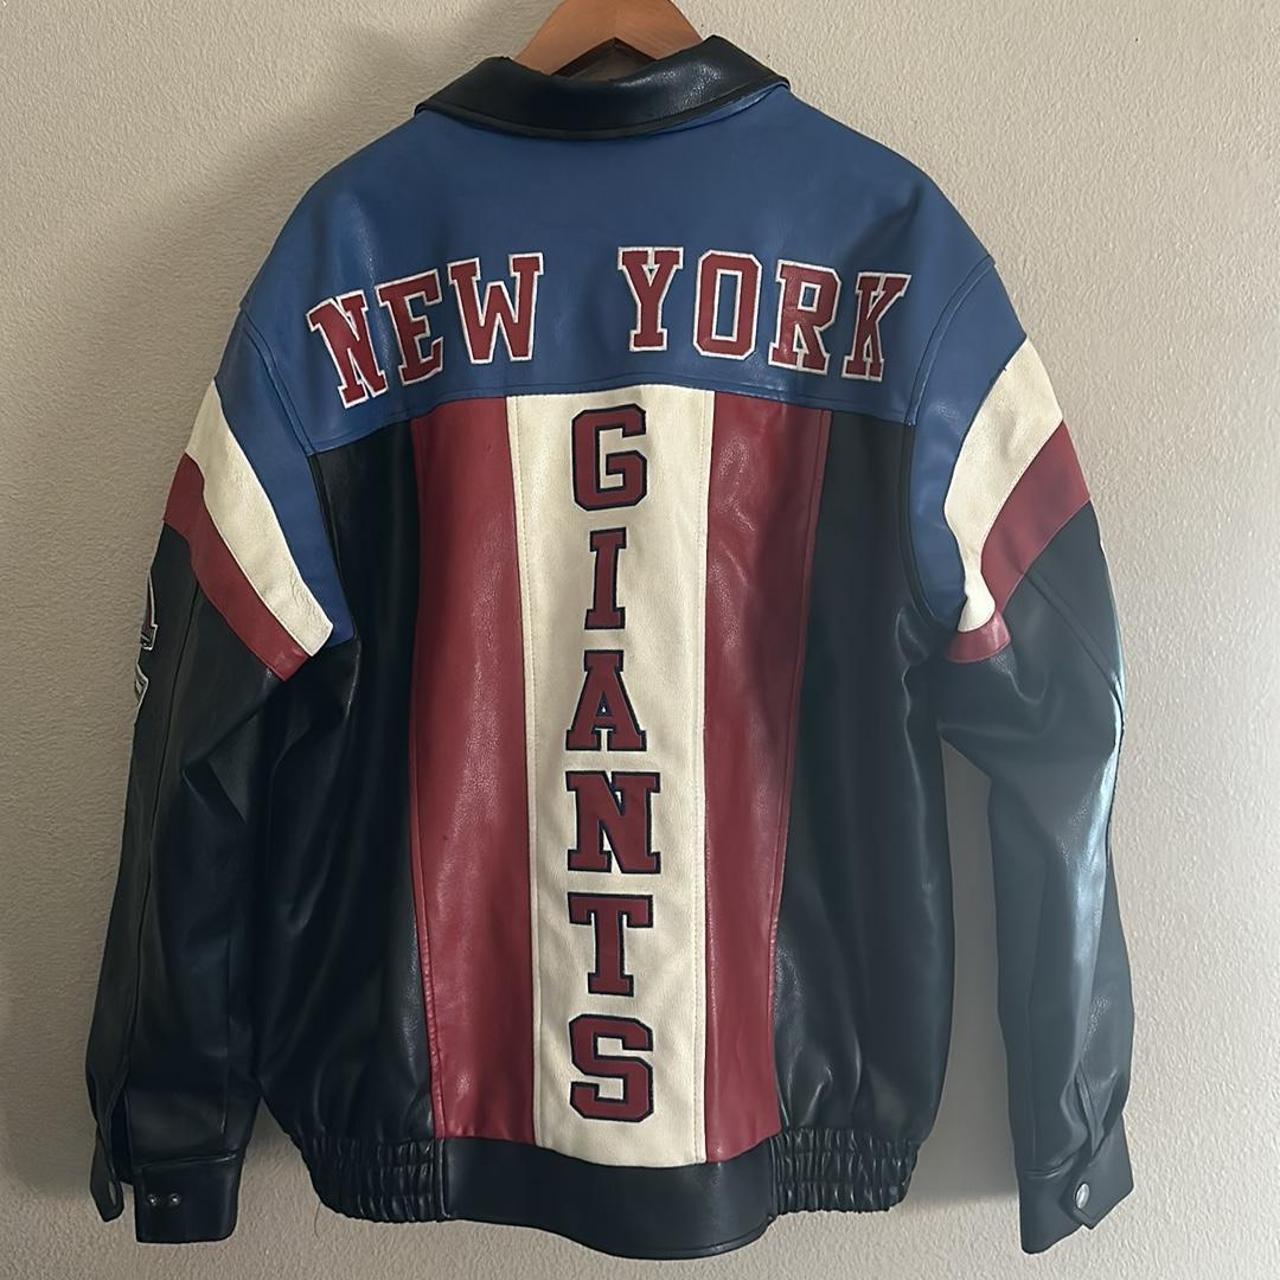 NY Giants NFL Leather Jacket Has a tear around the... - Depop